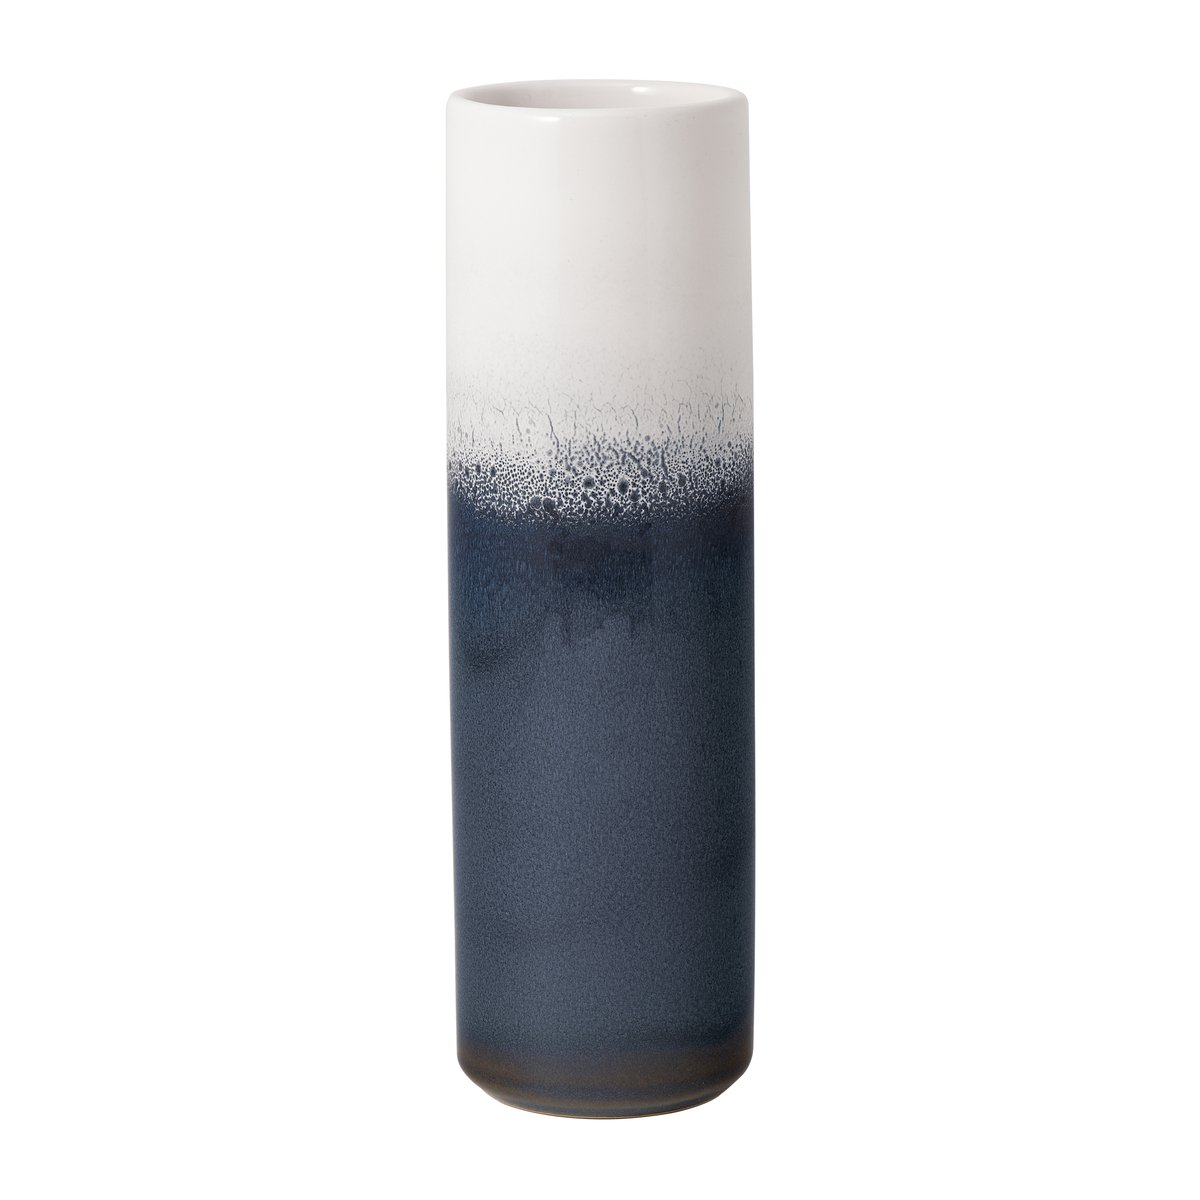 Villeroy & Boch Lave Home cylinder maljakko 25 cm Sininen-valkoinen